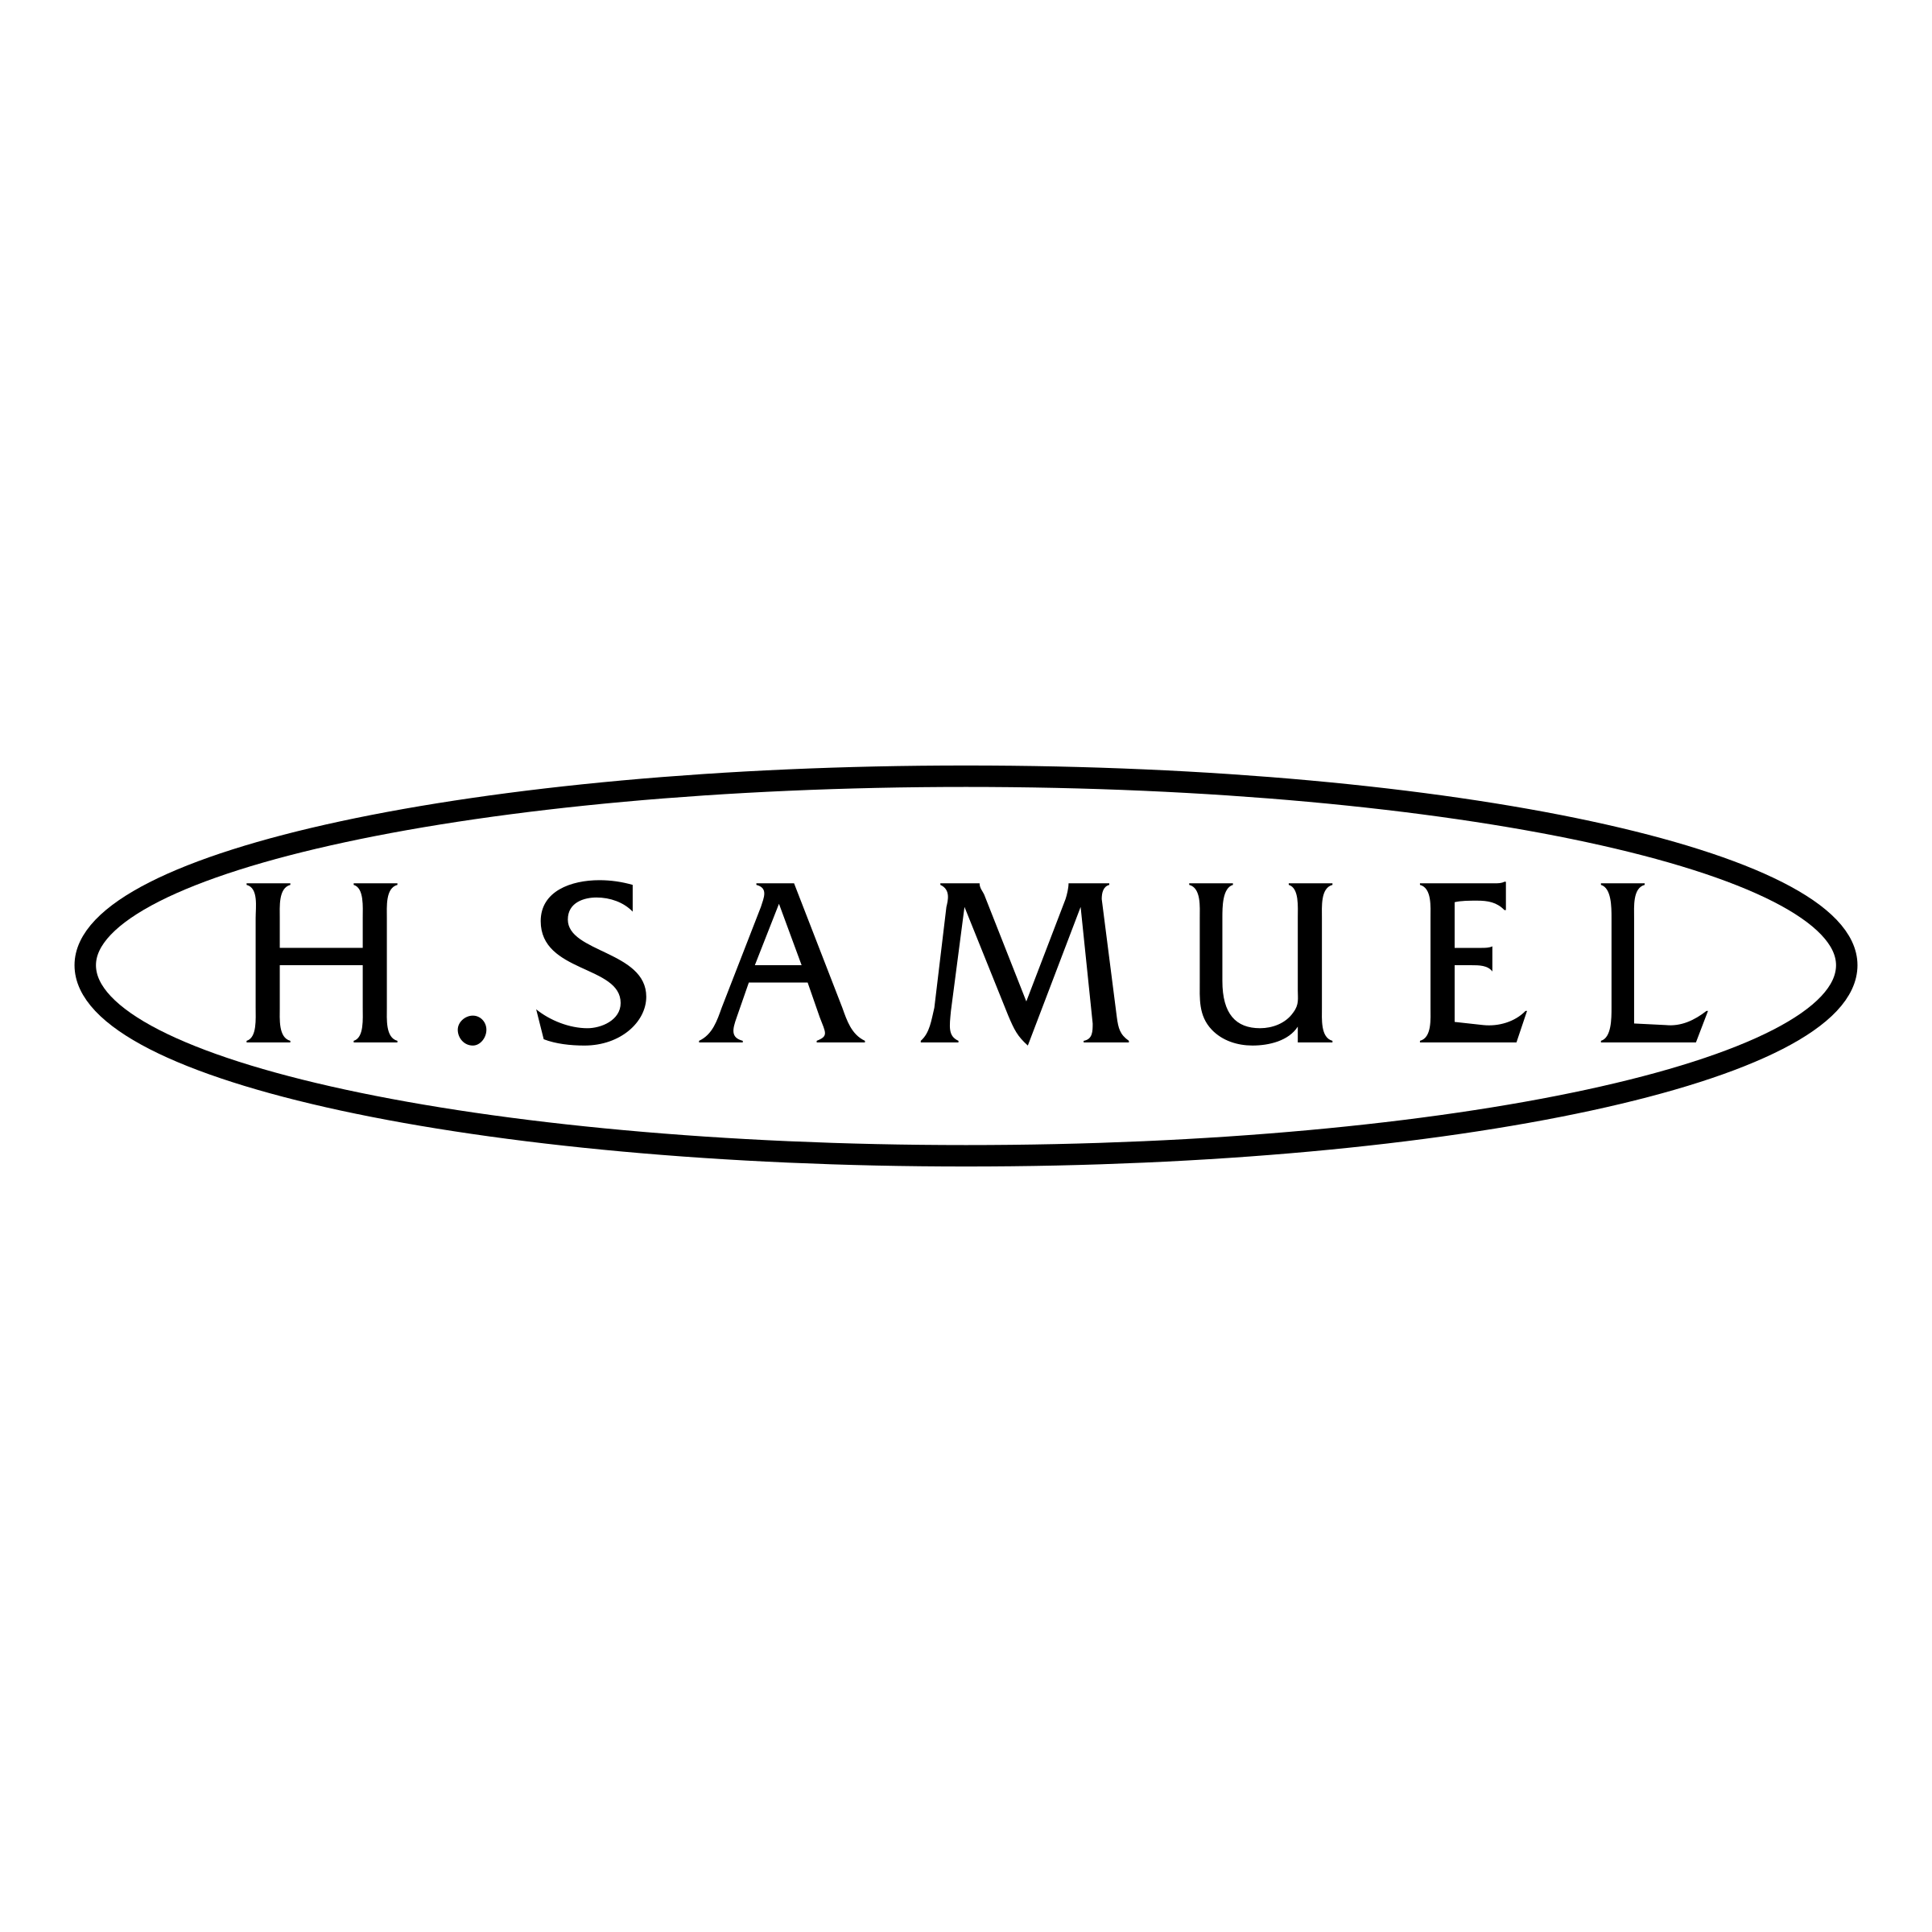 Samuel Logo - H Samuel Logo PNG Transparent & SVG Vector - Freebie Supply